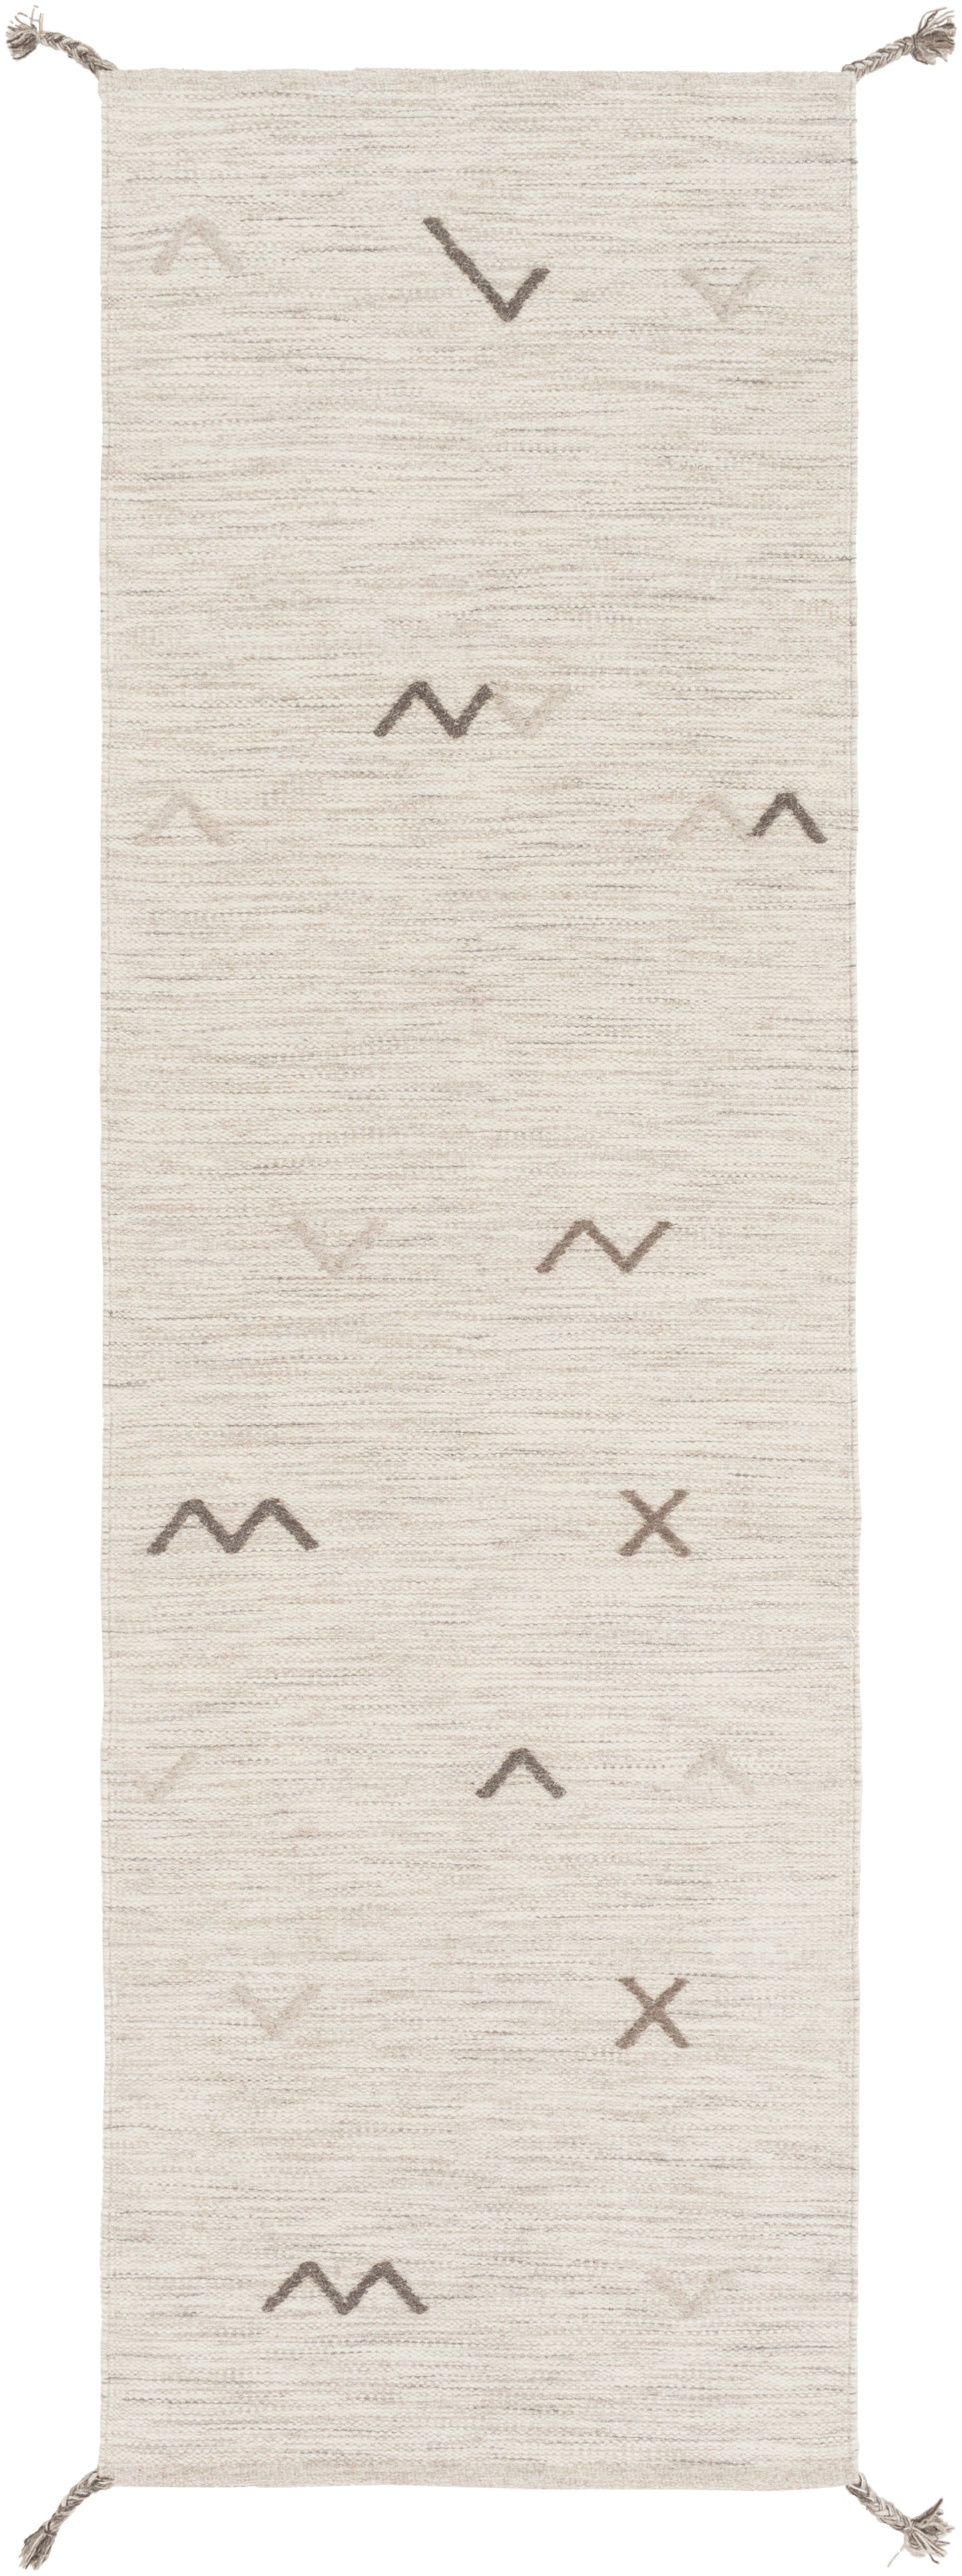 Montezuma 13125 Hand Woven Wool Indoor Area Rug by Surya Rugs